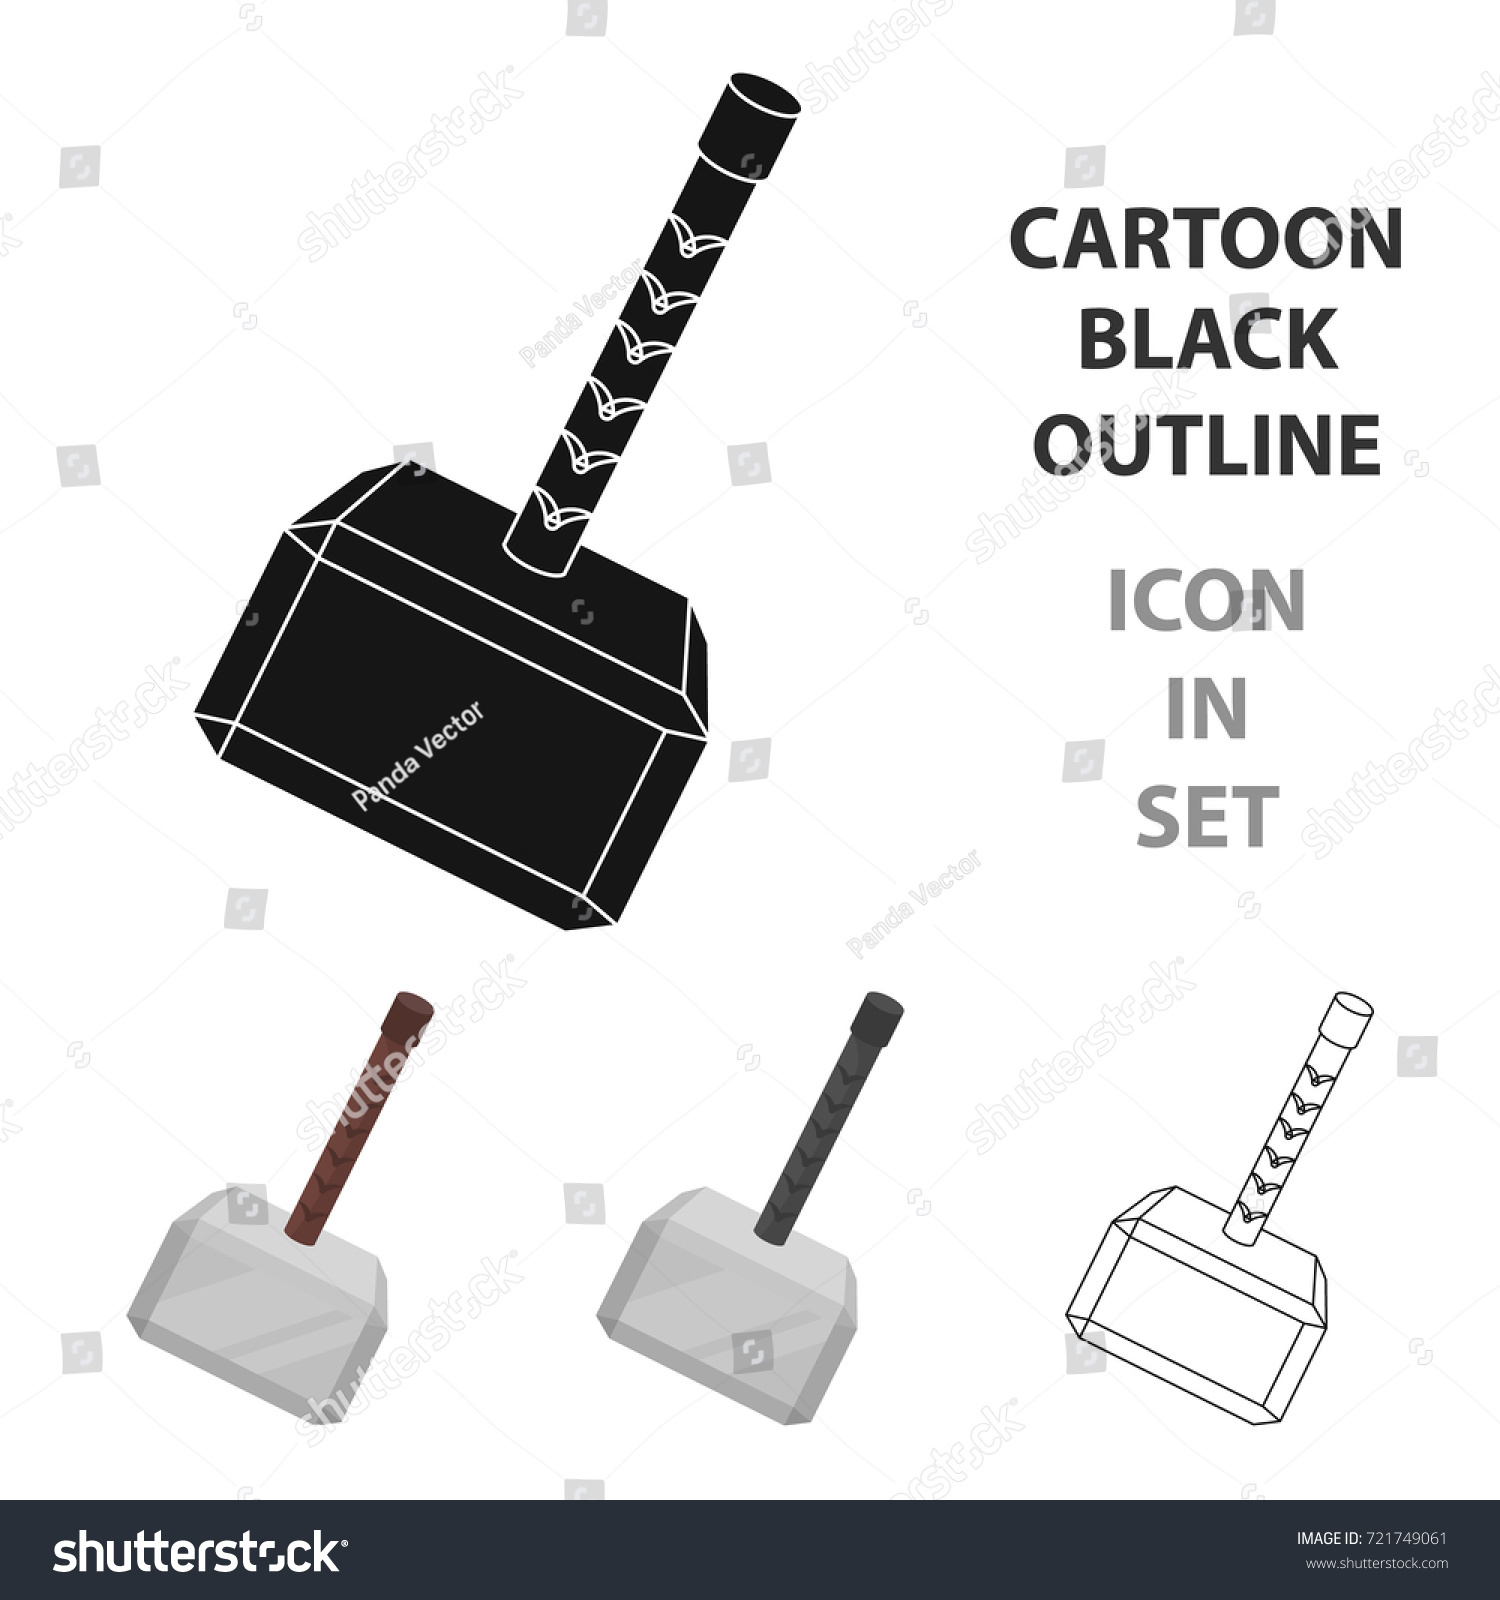 SVG of Viking battle hammer icon in cartoon style isolated on white background. Vikings symbol stock vector illustration. svg